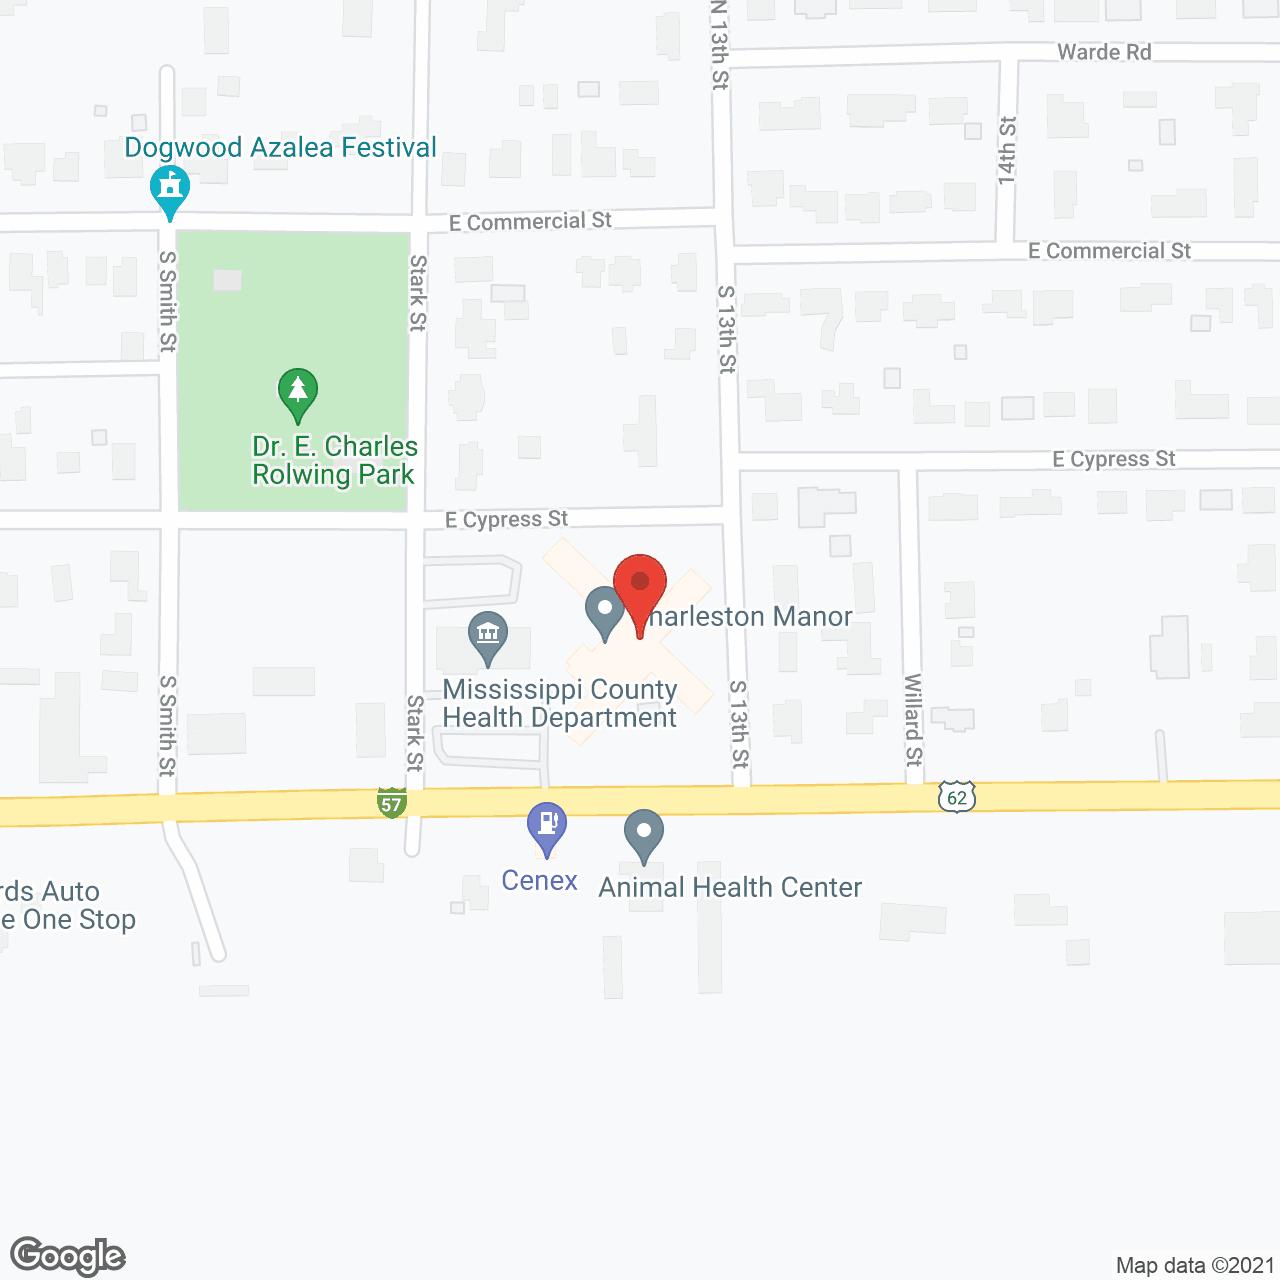 Charleston Manor in google map